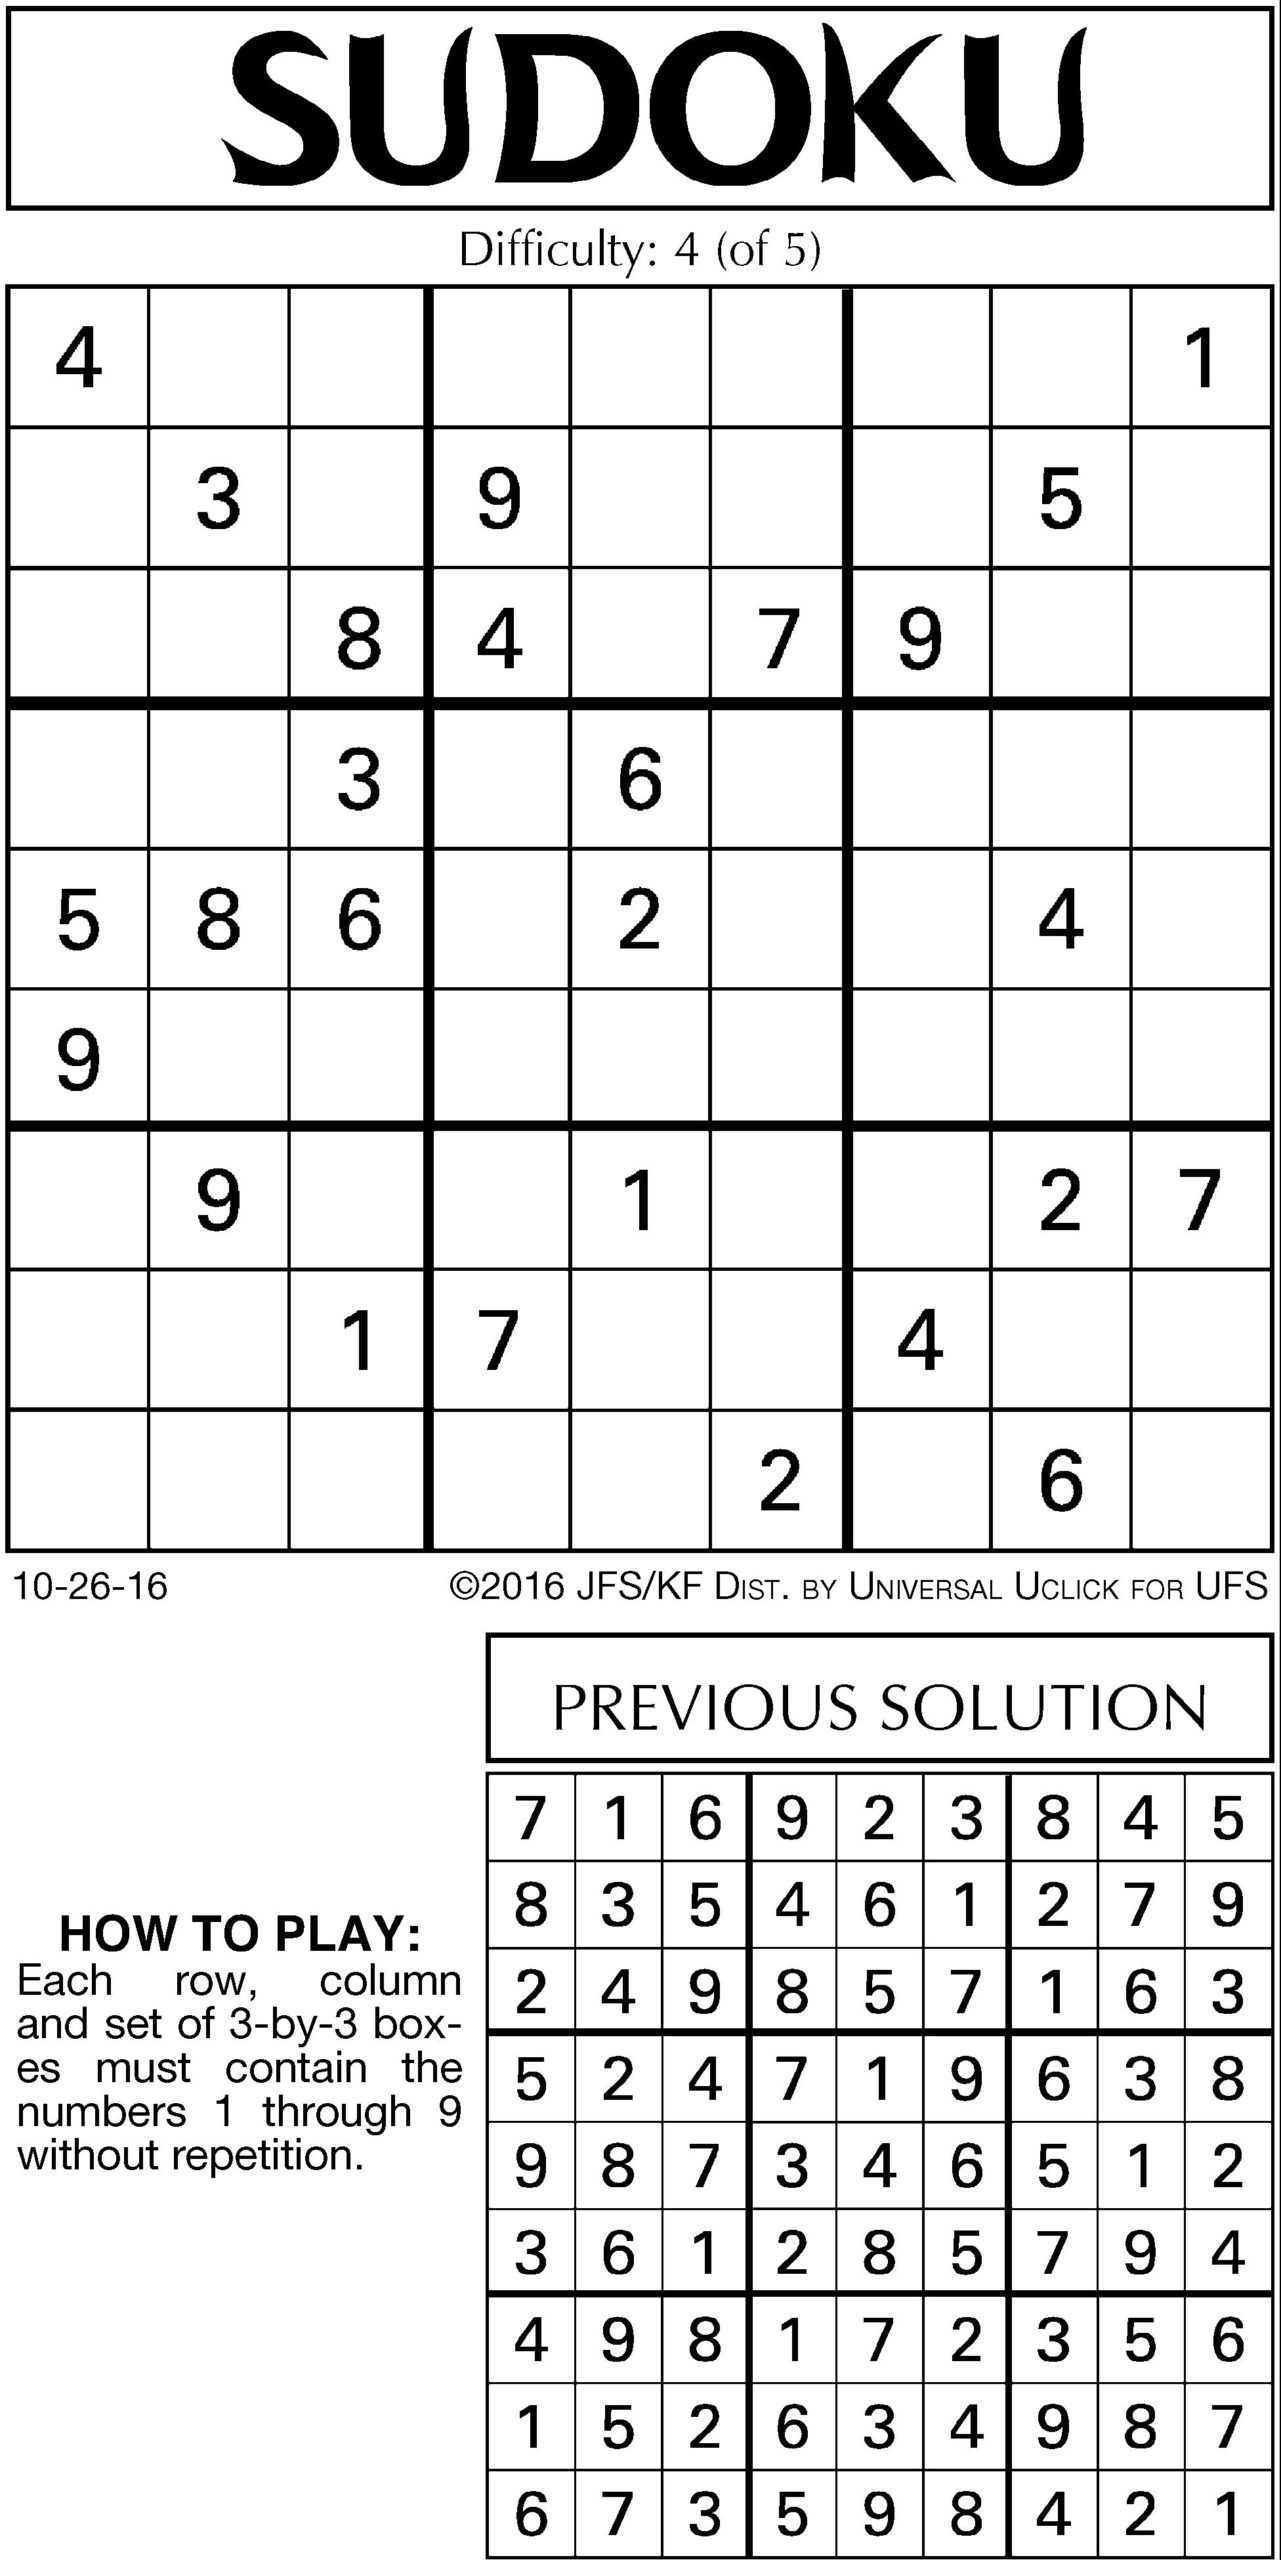 Tribune Printable Sudoku